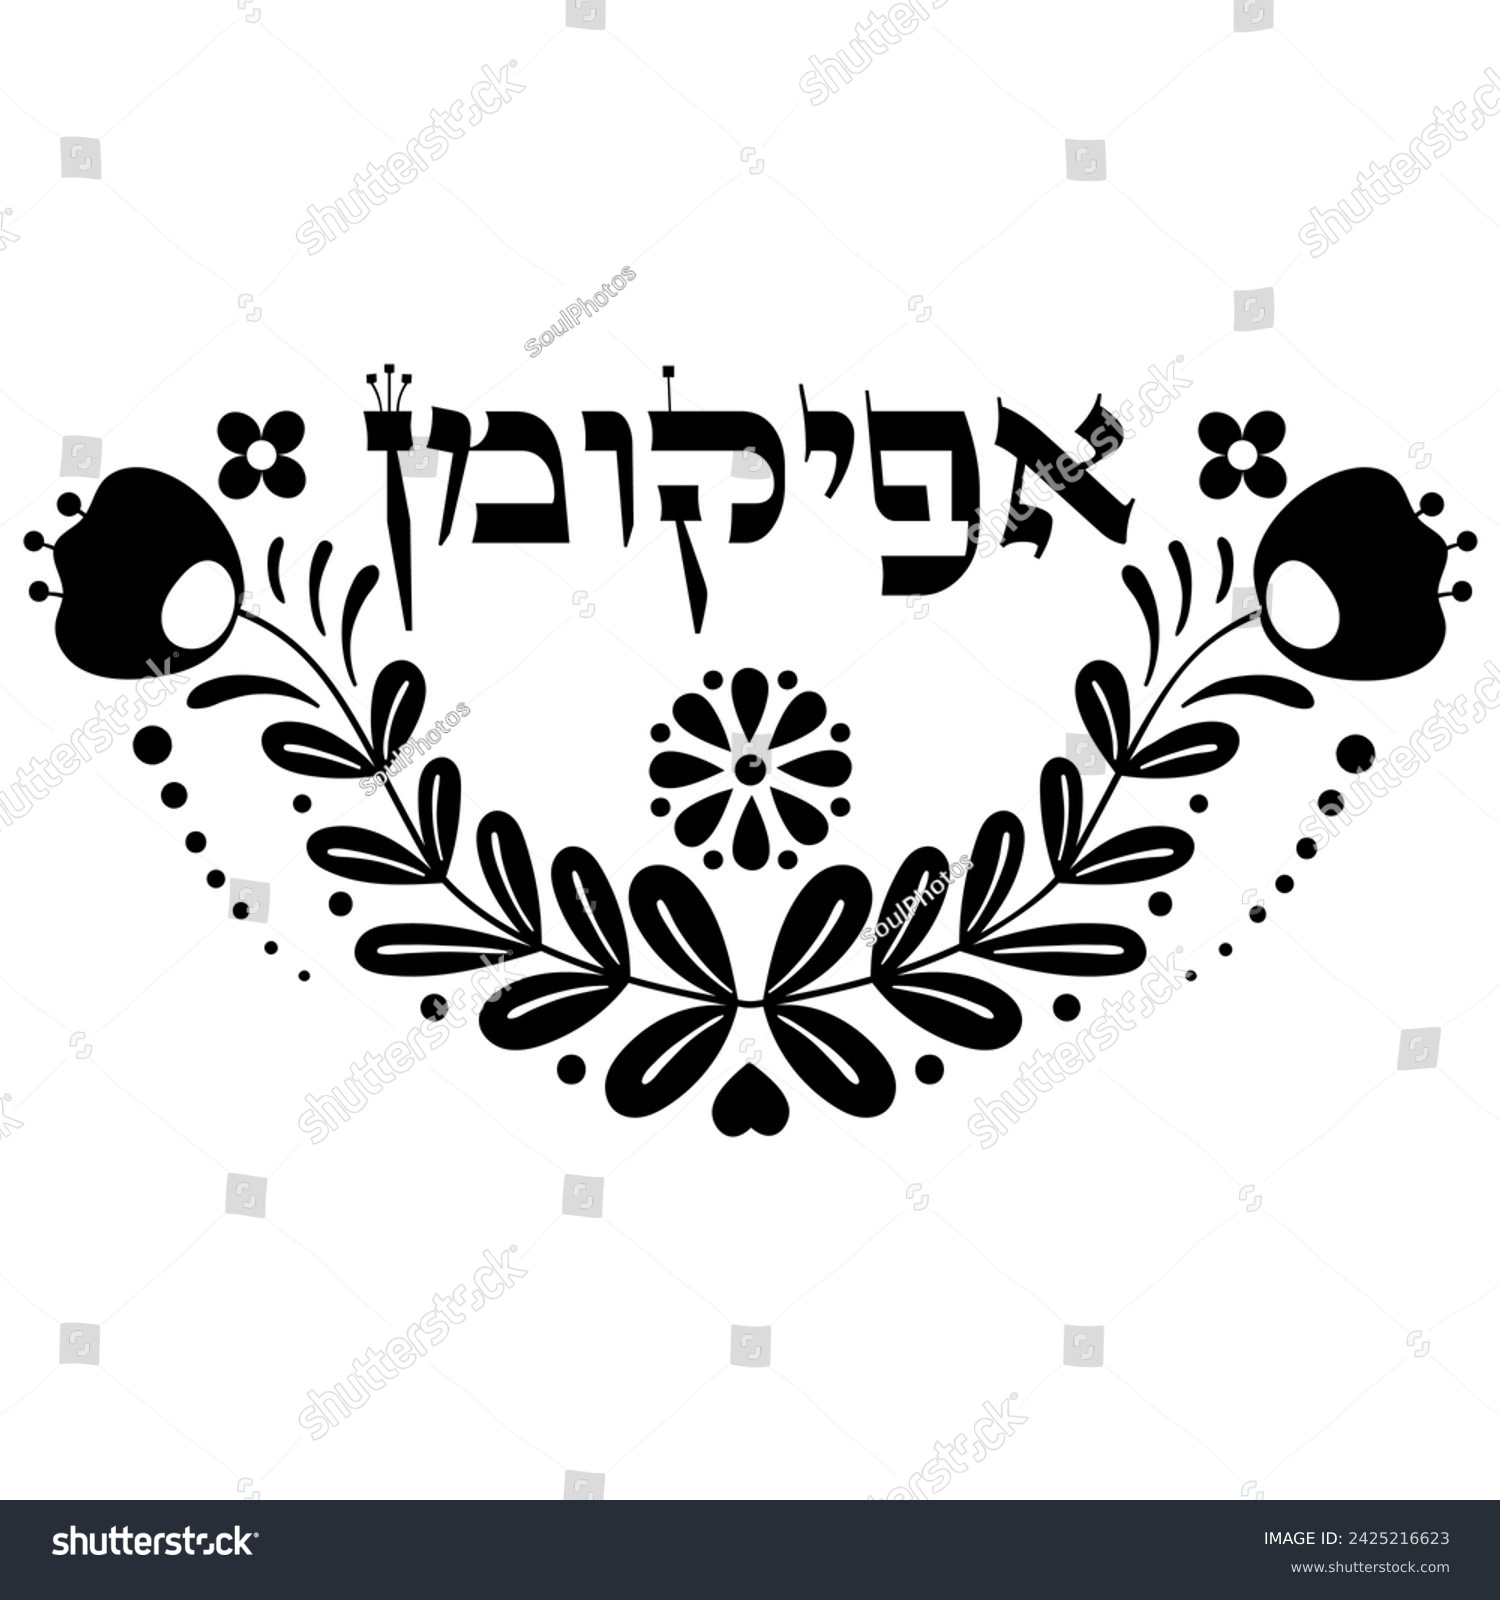 SVG of Black  half wreath folk floral branches with Hebrew name Afikoman meaning 